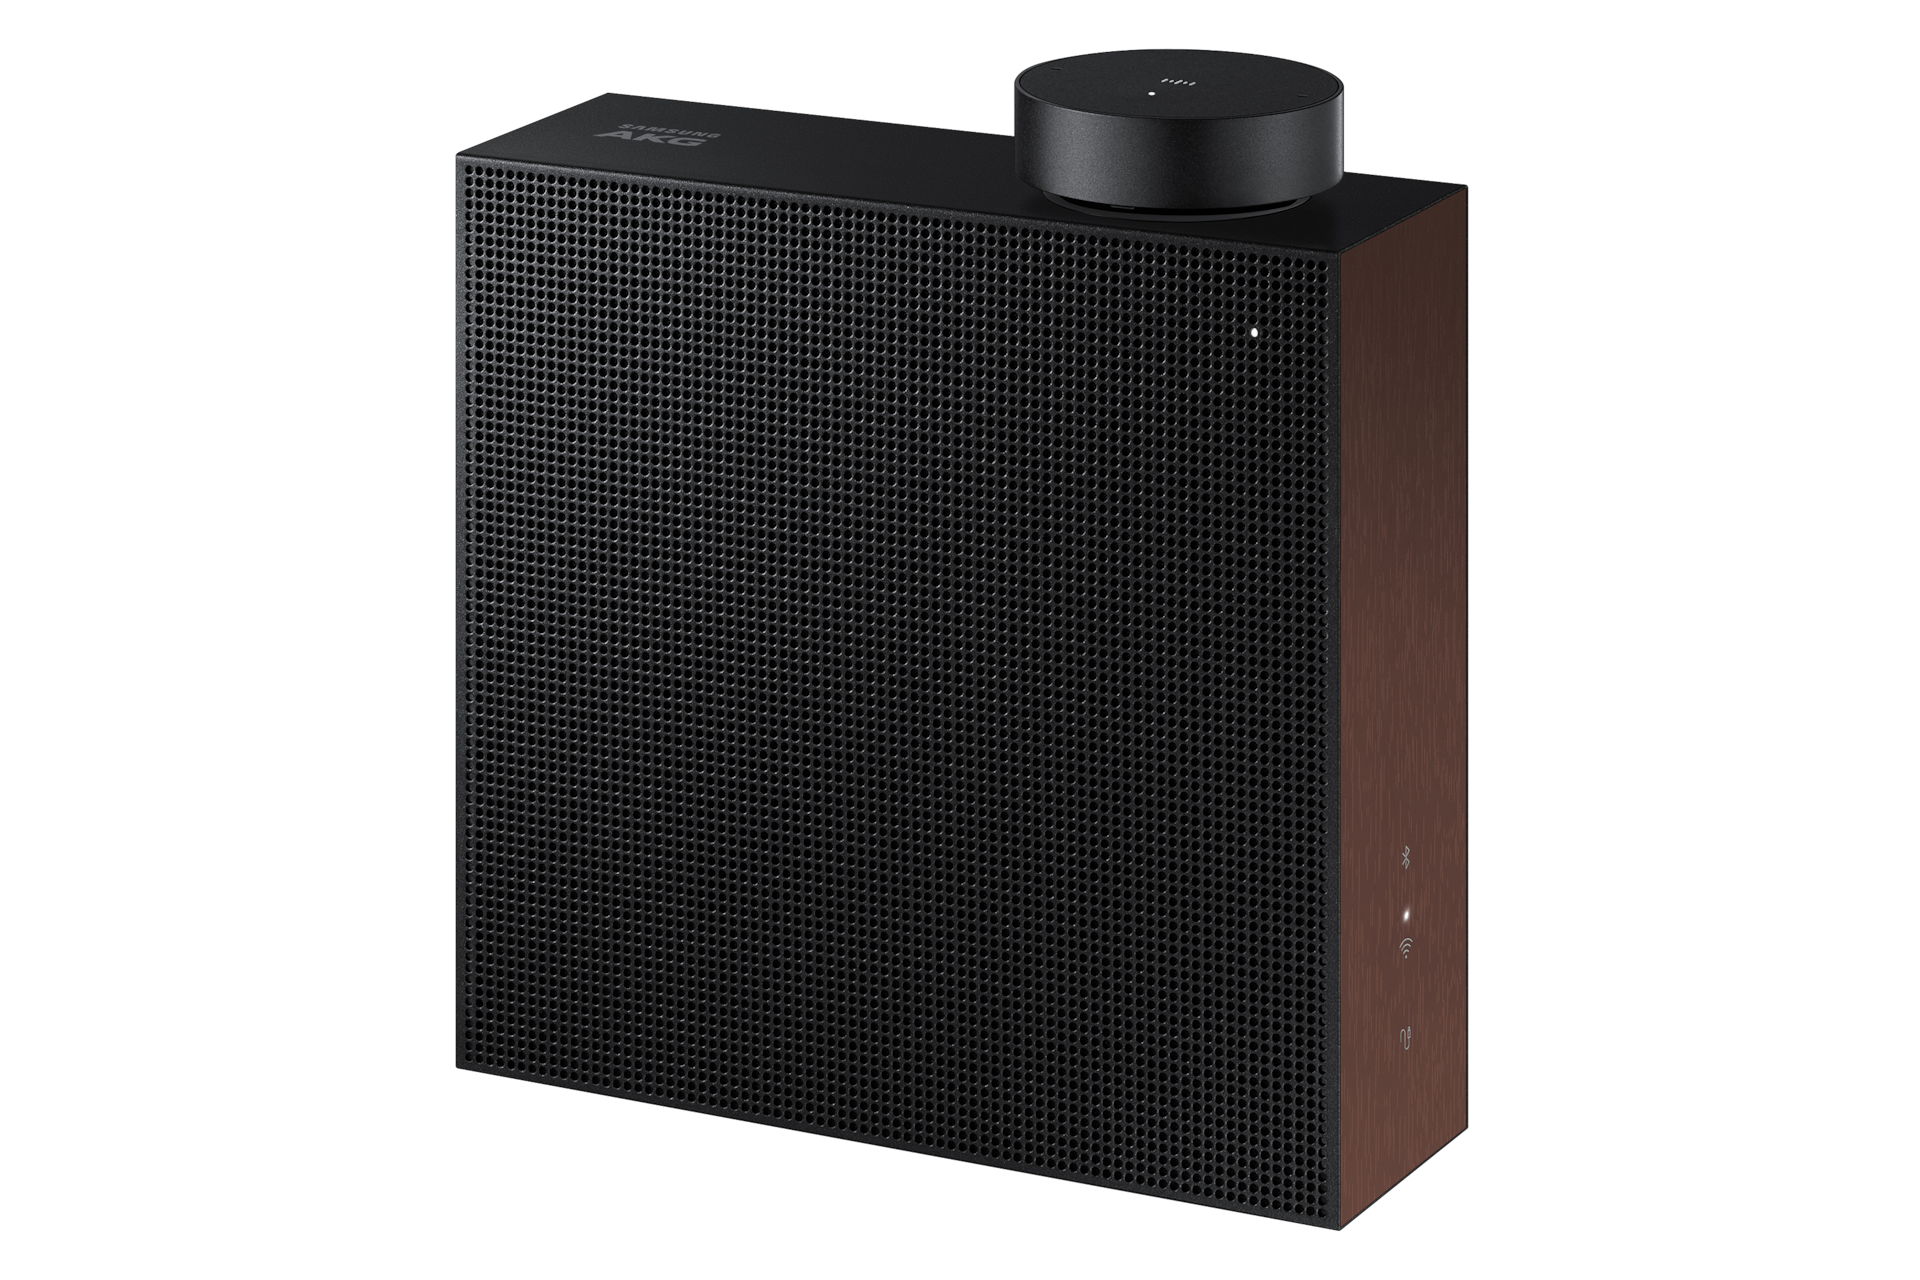 AKG Smart Speaker in Black | Samsung UK